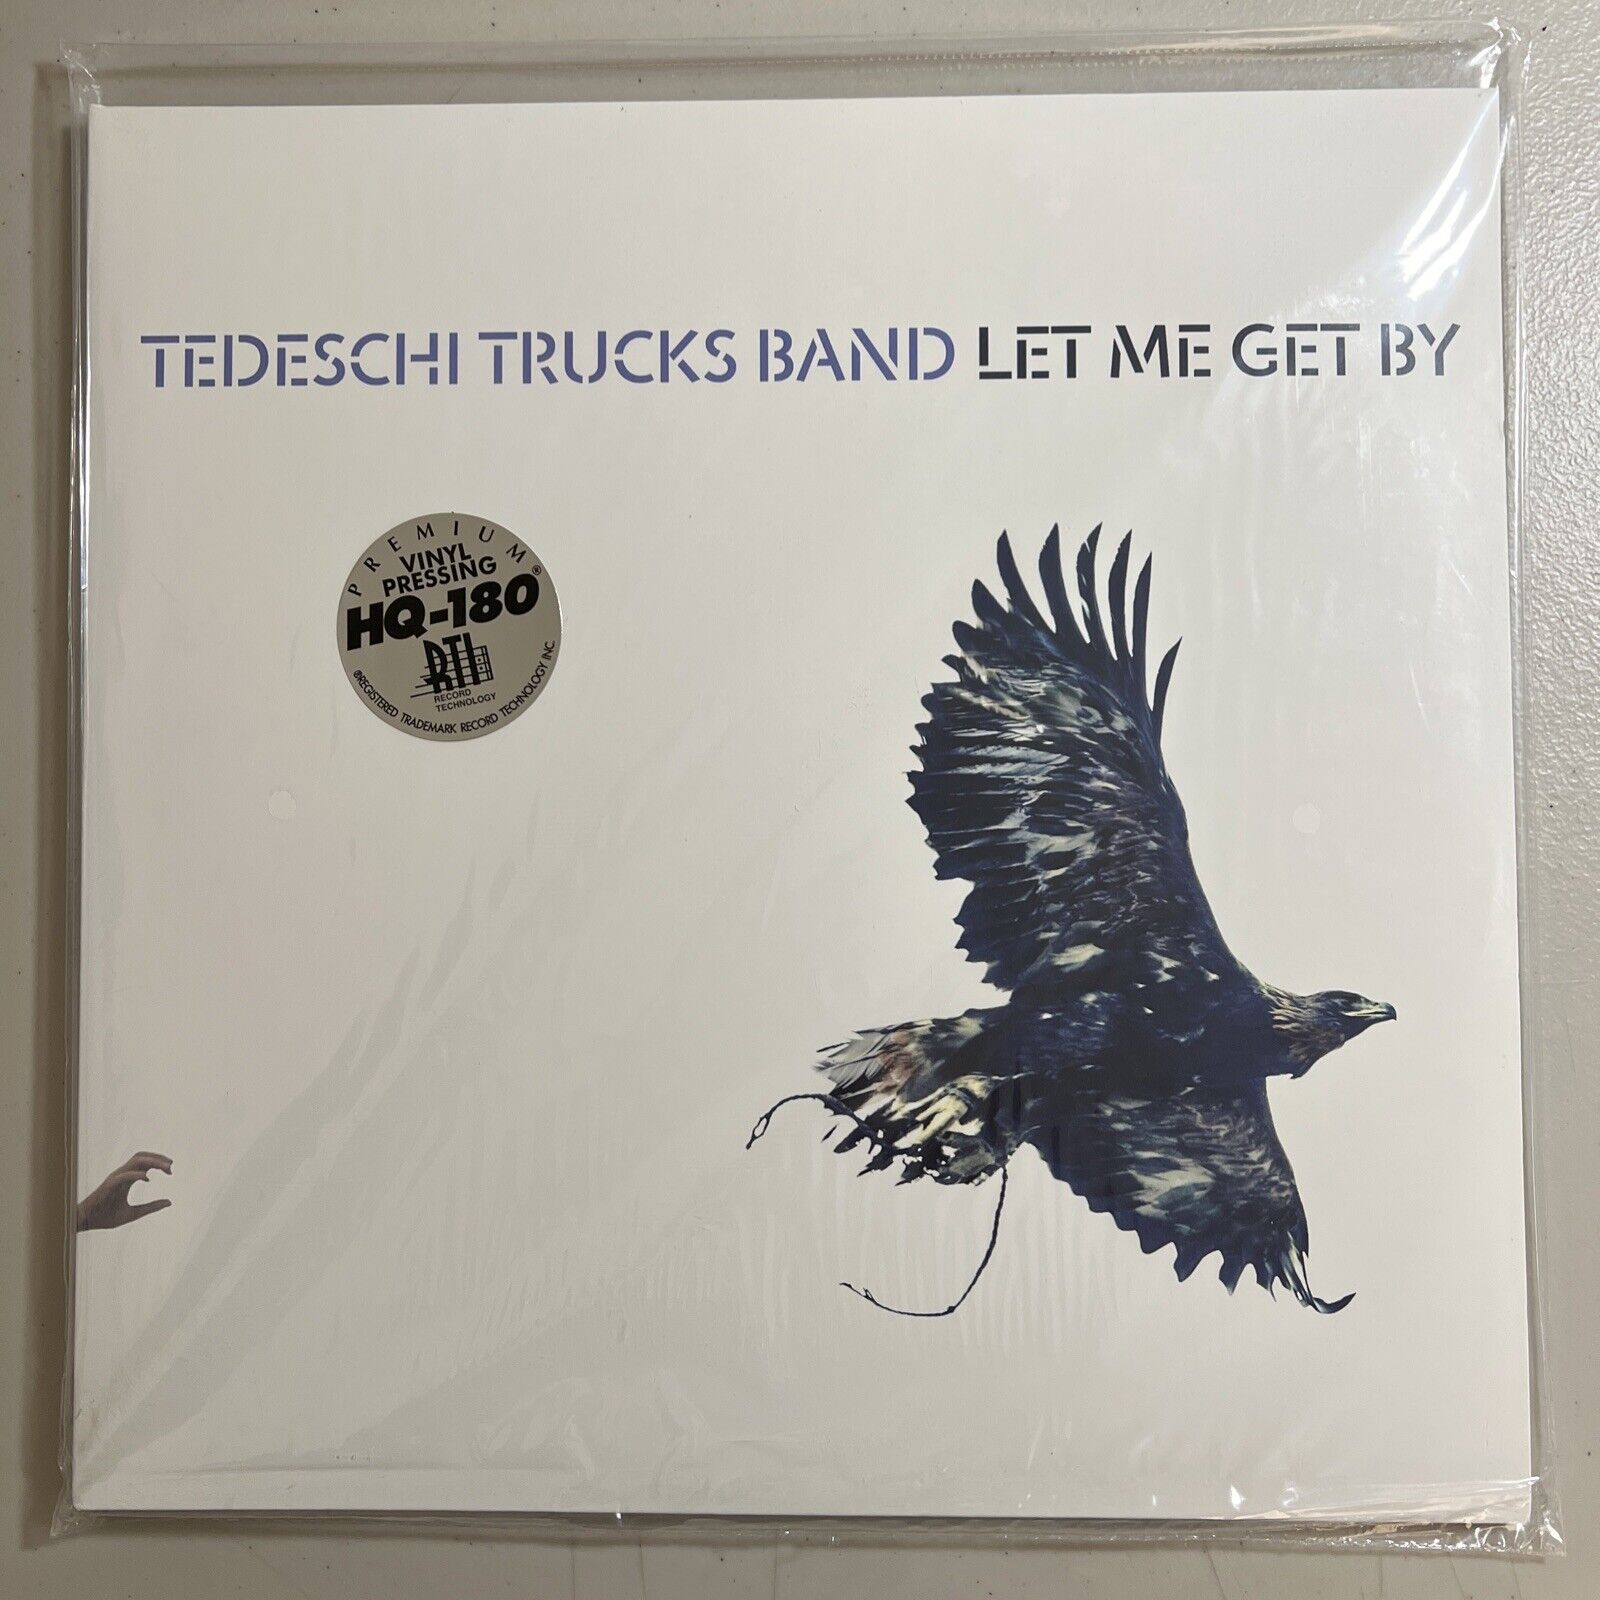 Tedeschi Trucks Band - Let Me Get By [New Vinyl LP] Gatefold LP Premium Vinyl